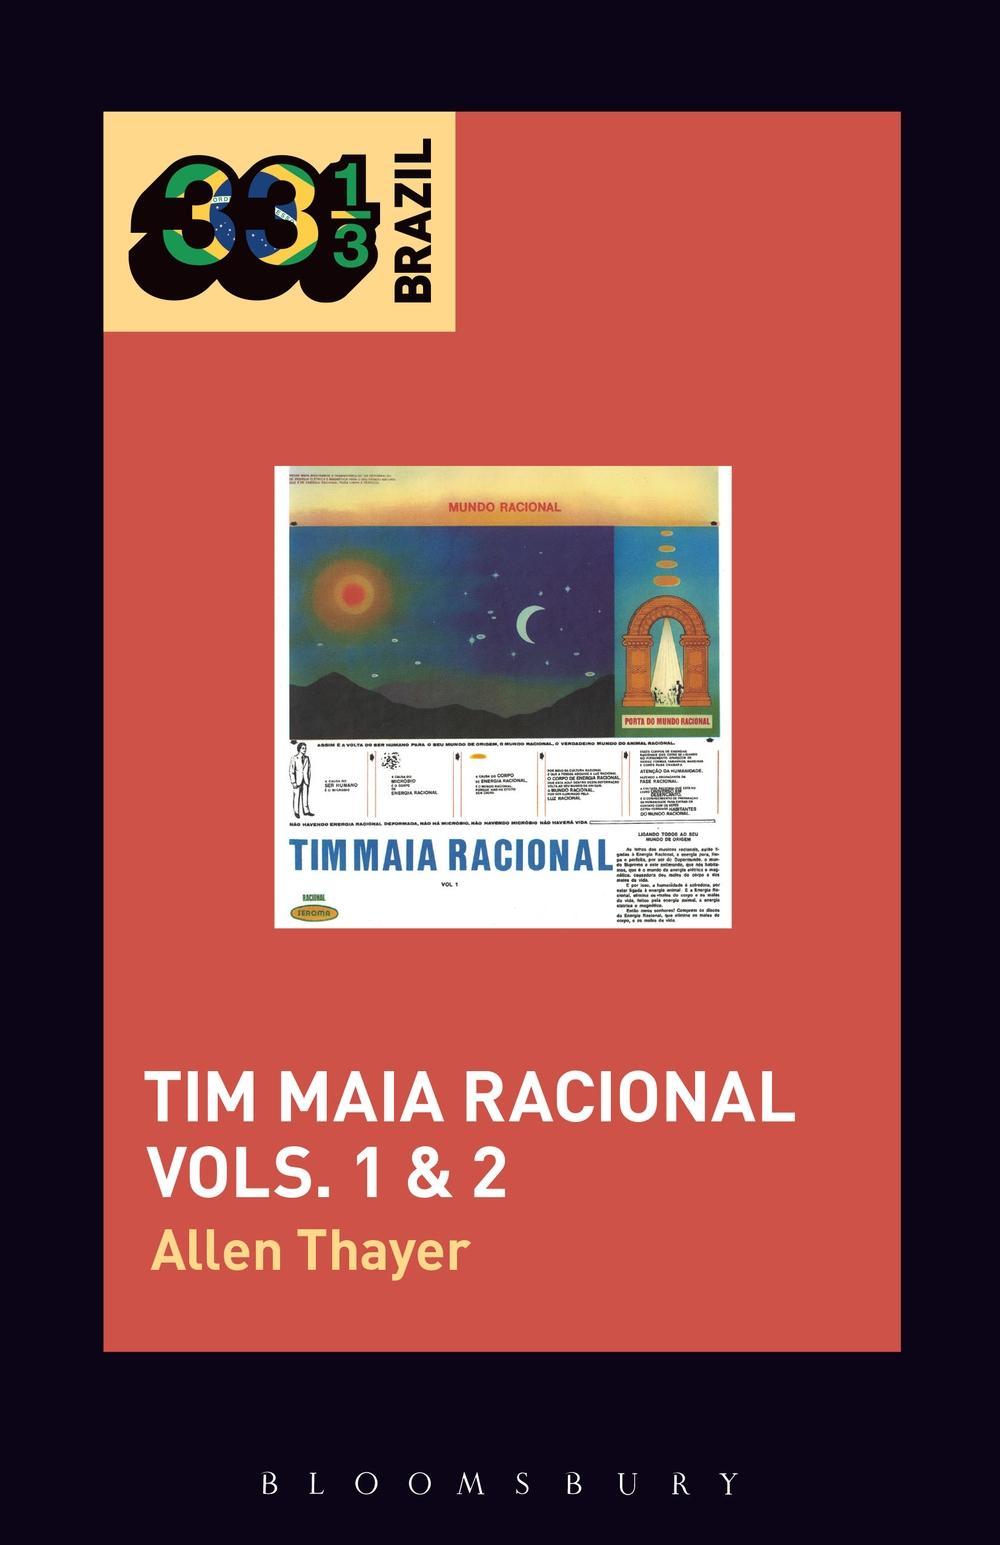 Tim Maia's Tim Maia Racional Vols. 1 & 2 - Allen Thayer